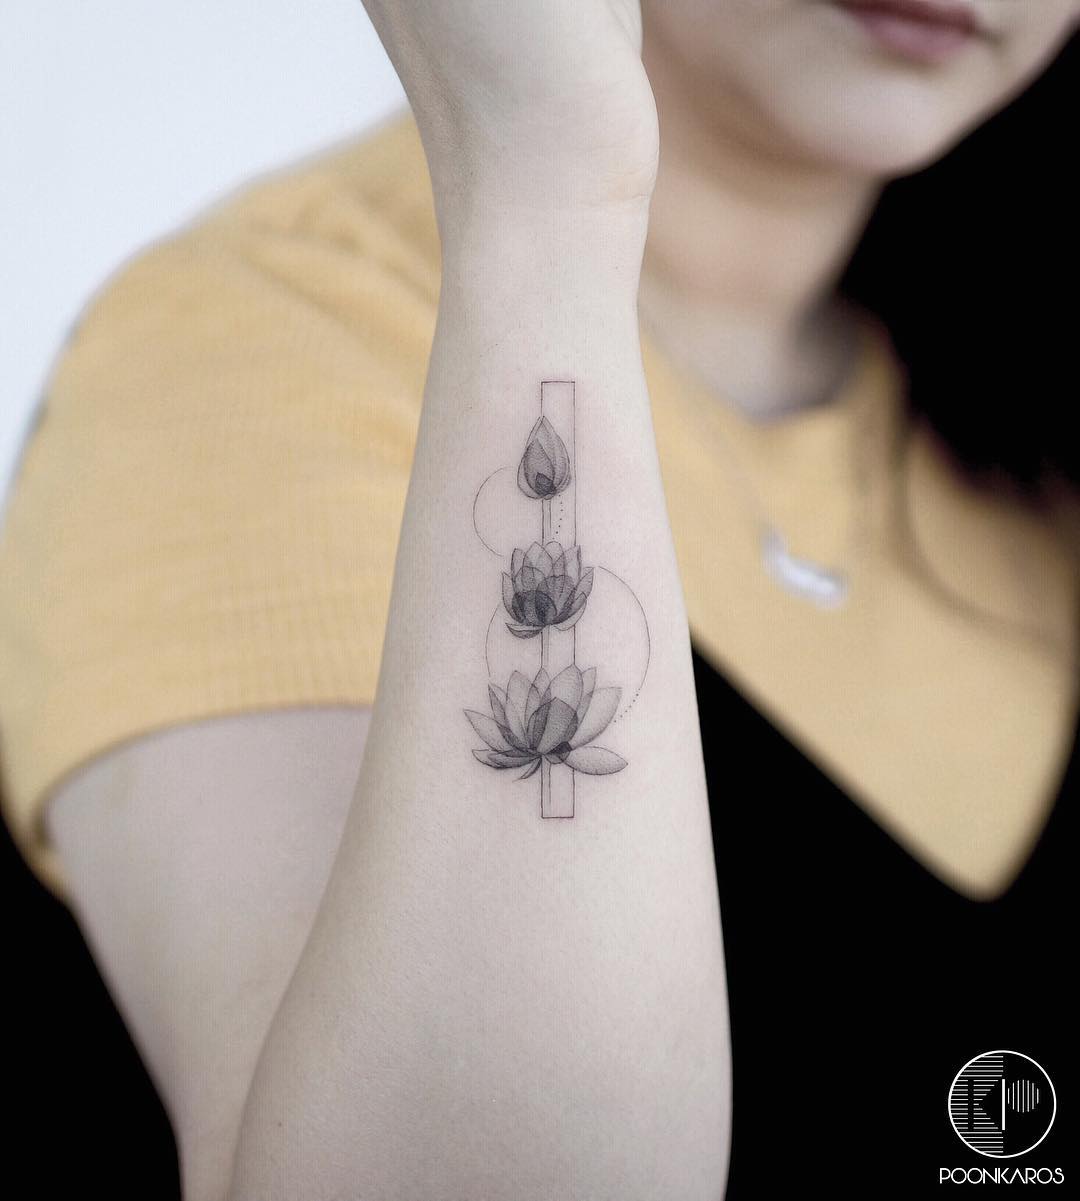 tattoo fiore di loto sul polso by @poonkaros